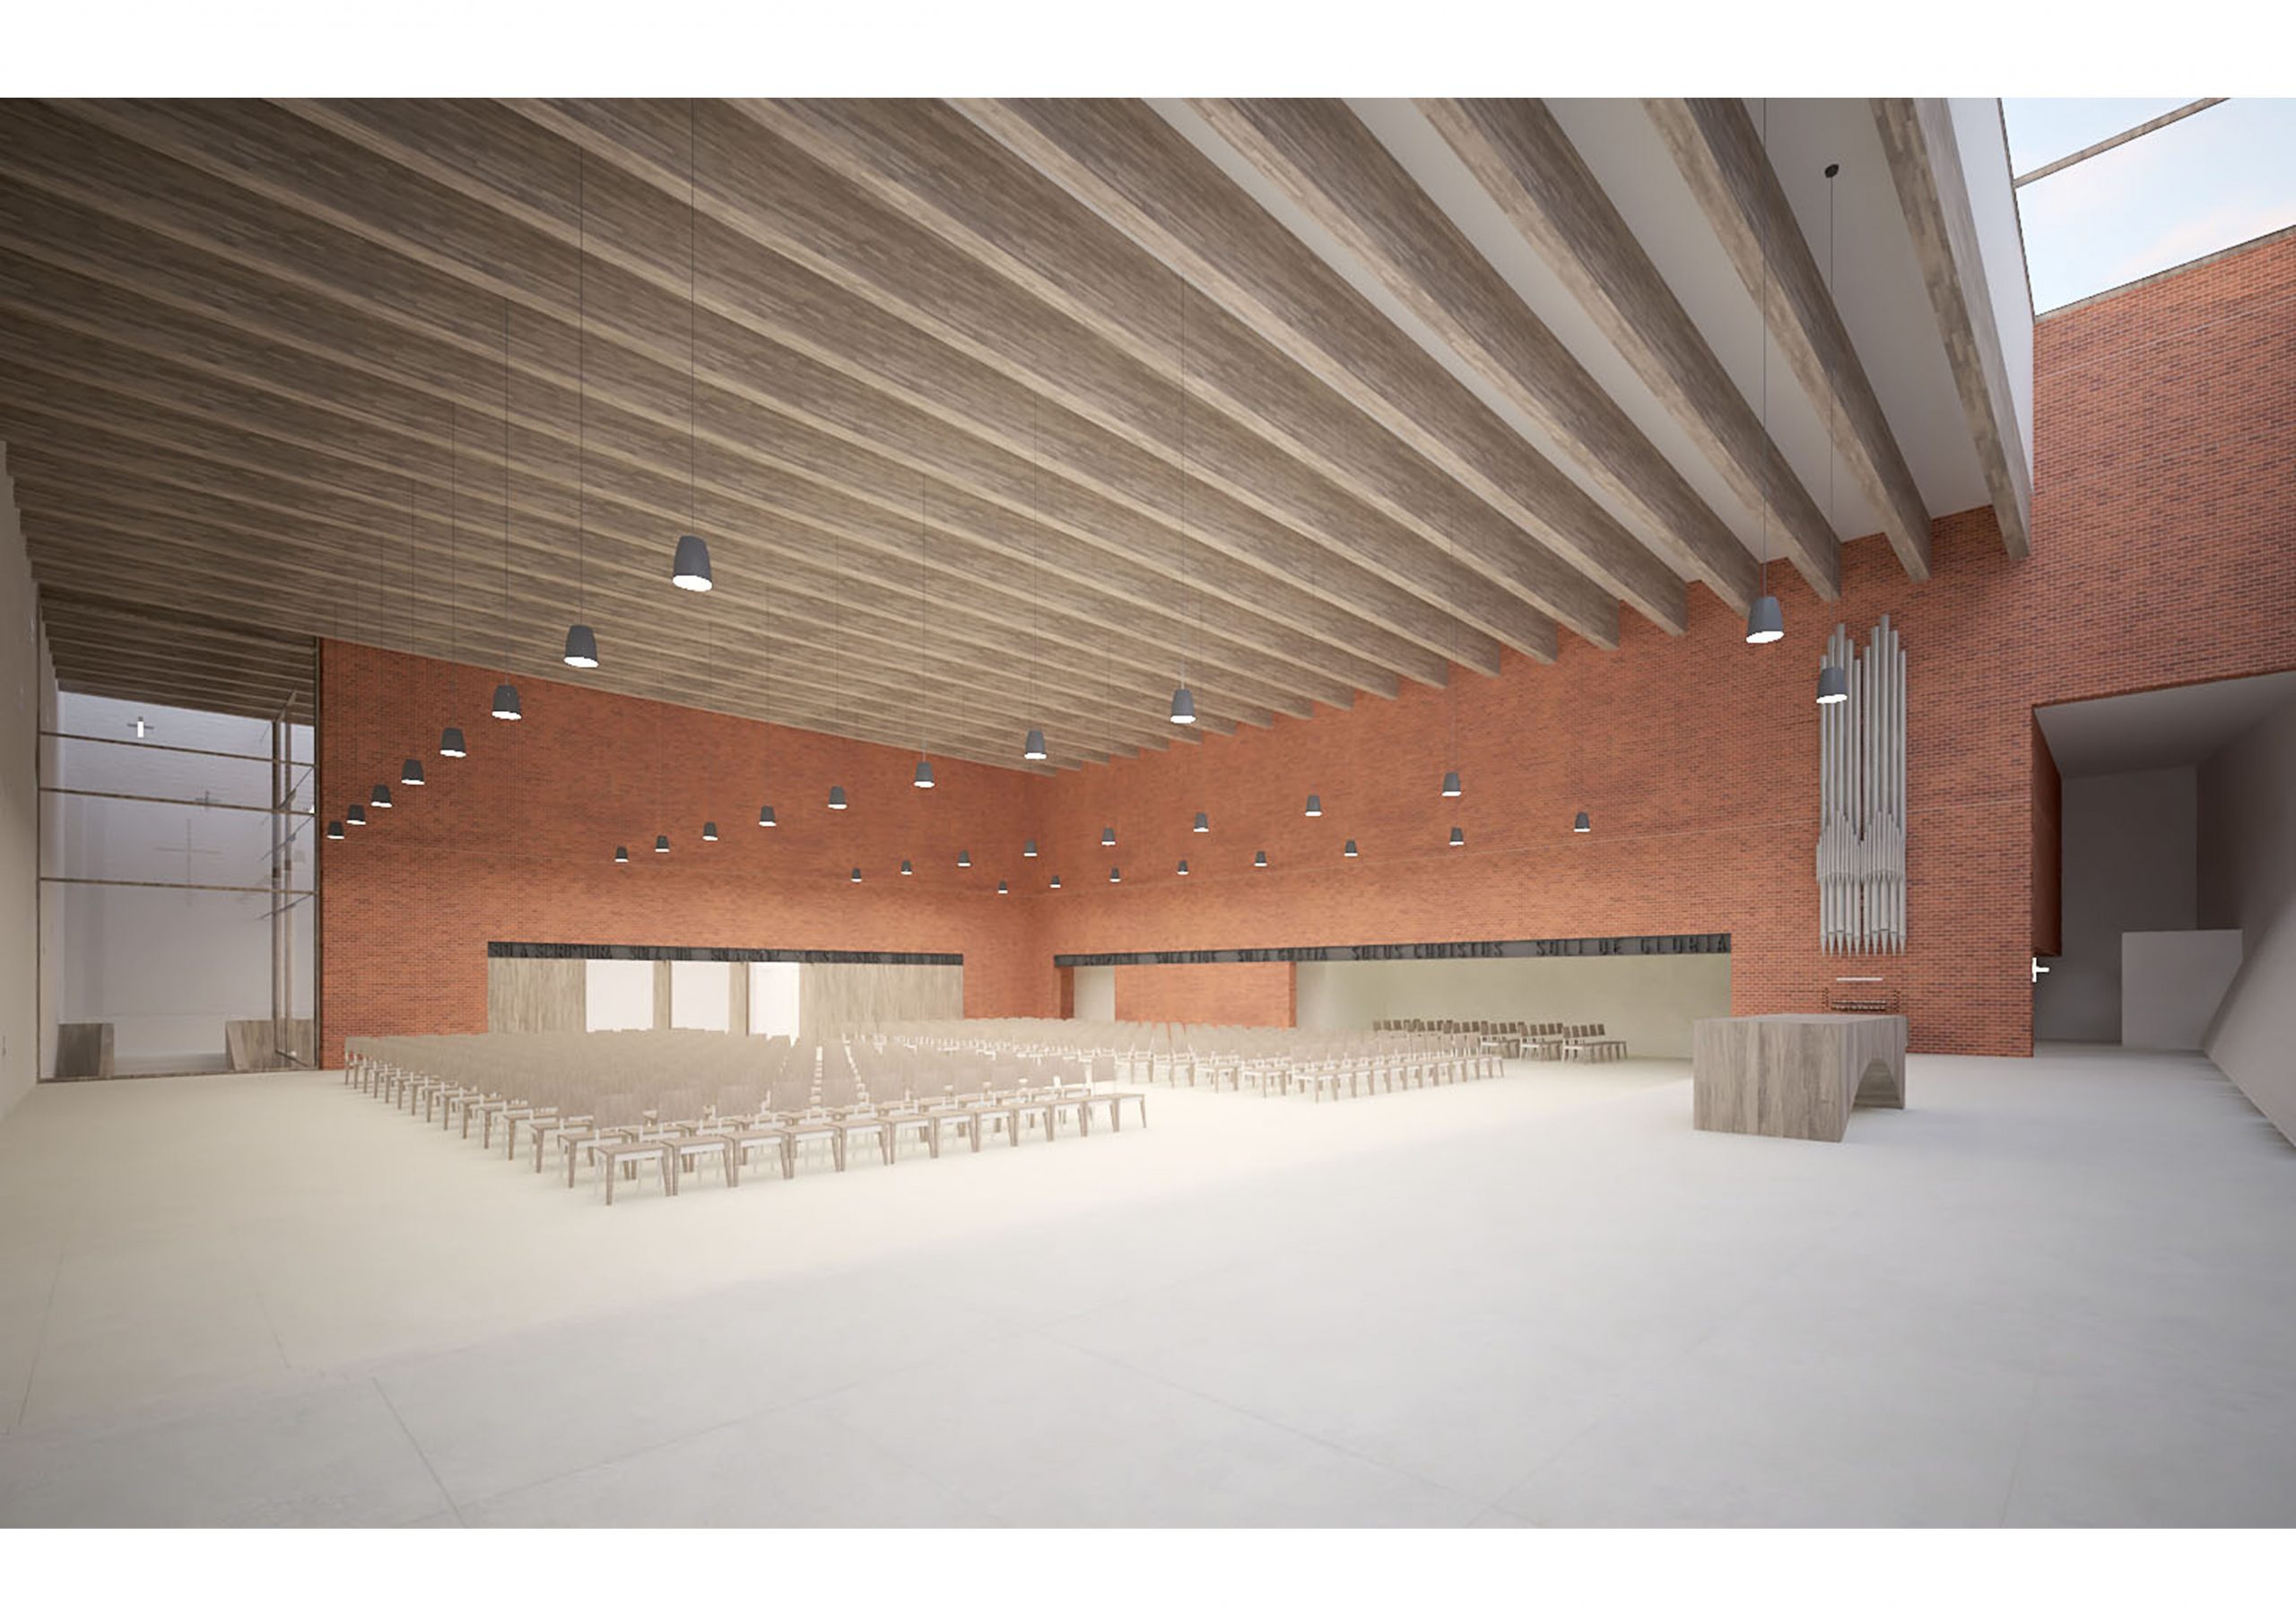 https://nbc-arhitect.ro/wp-content/uploads/2020/10/NBC-Arhitect-_-public-buildings-_-Protestant-Church-_-Copenhagen-_-interior-view_4-scaled.jpg